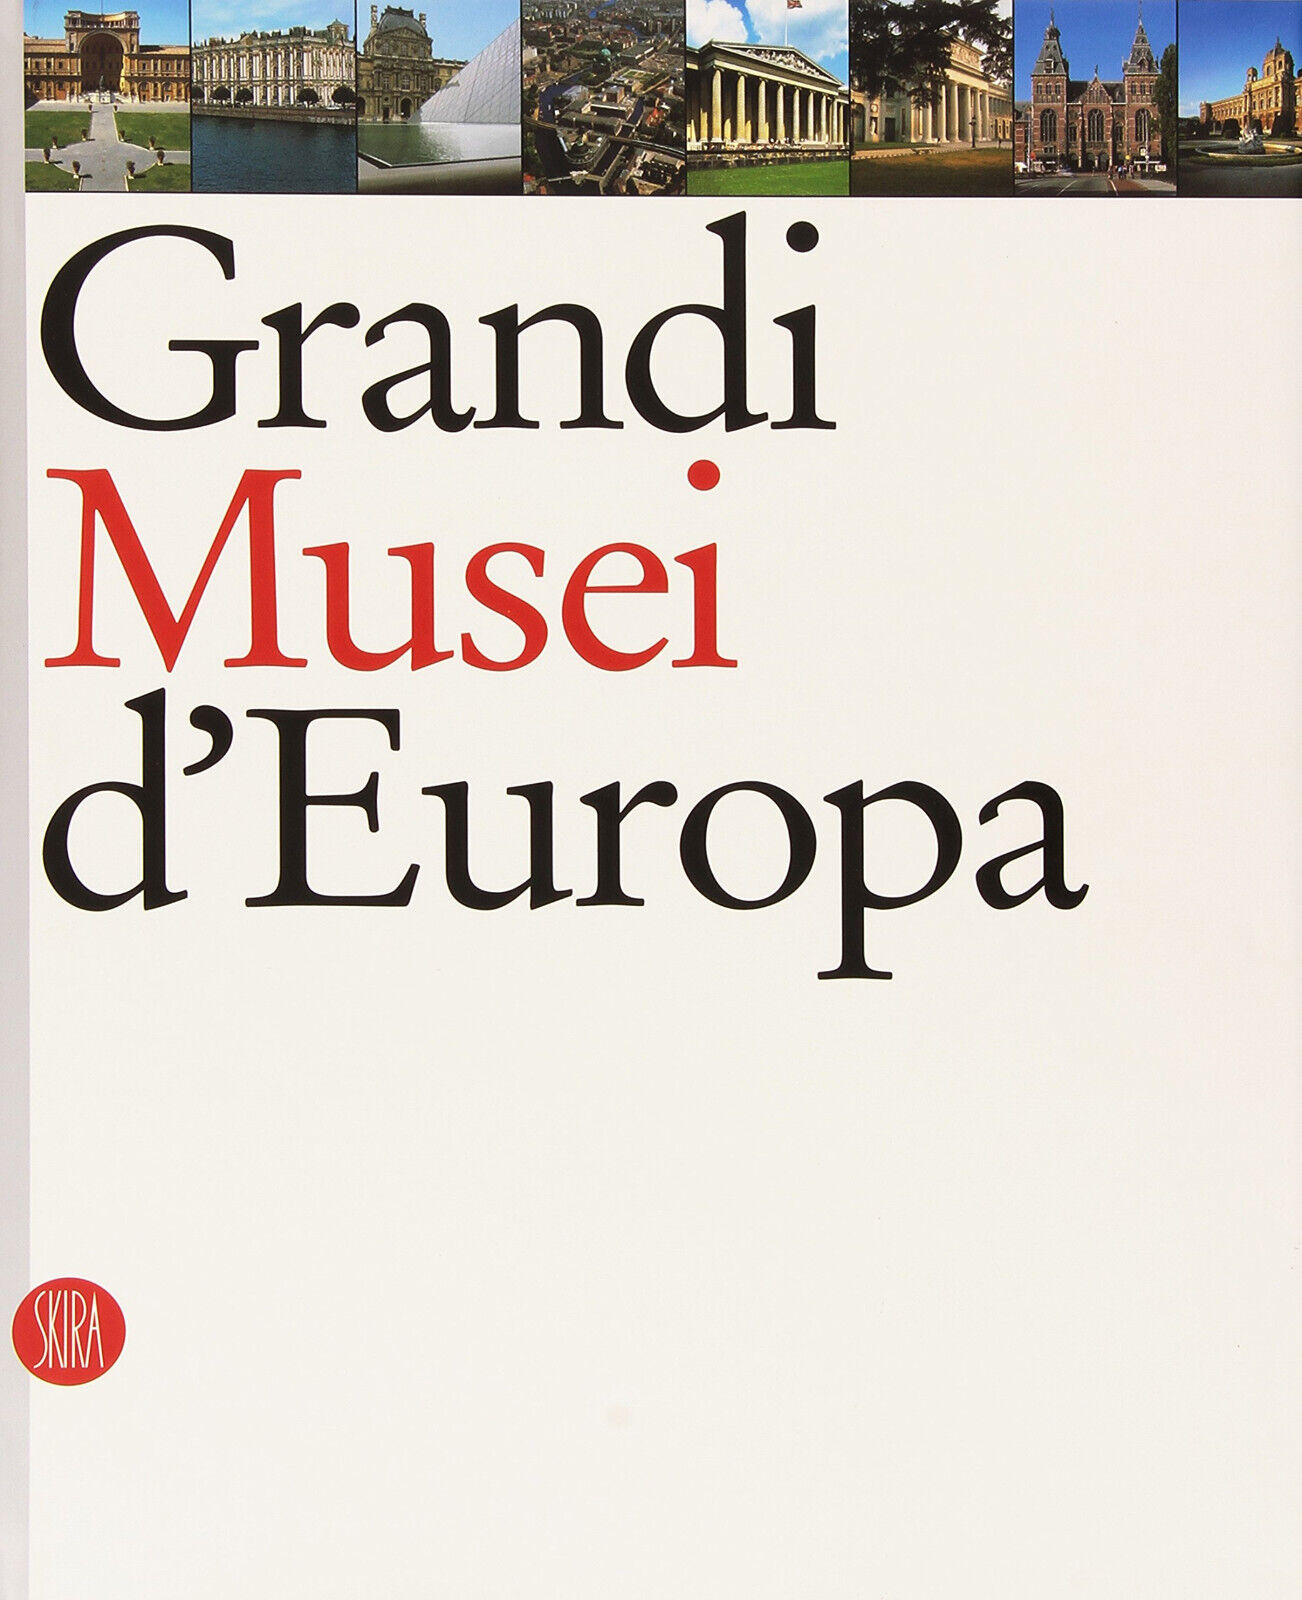 Grandi musei d'Europa - AA.VV. - Skira, 2003 libro usato